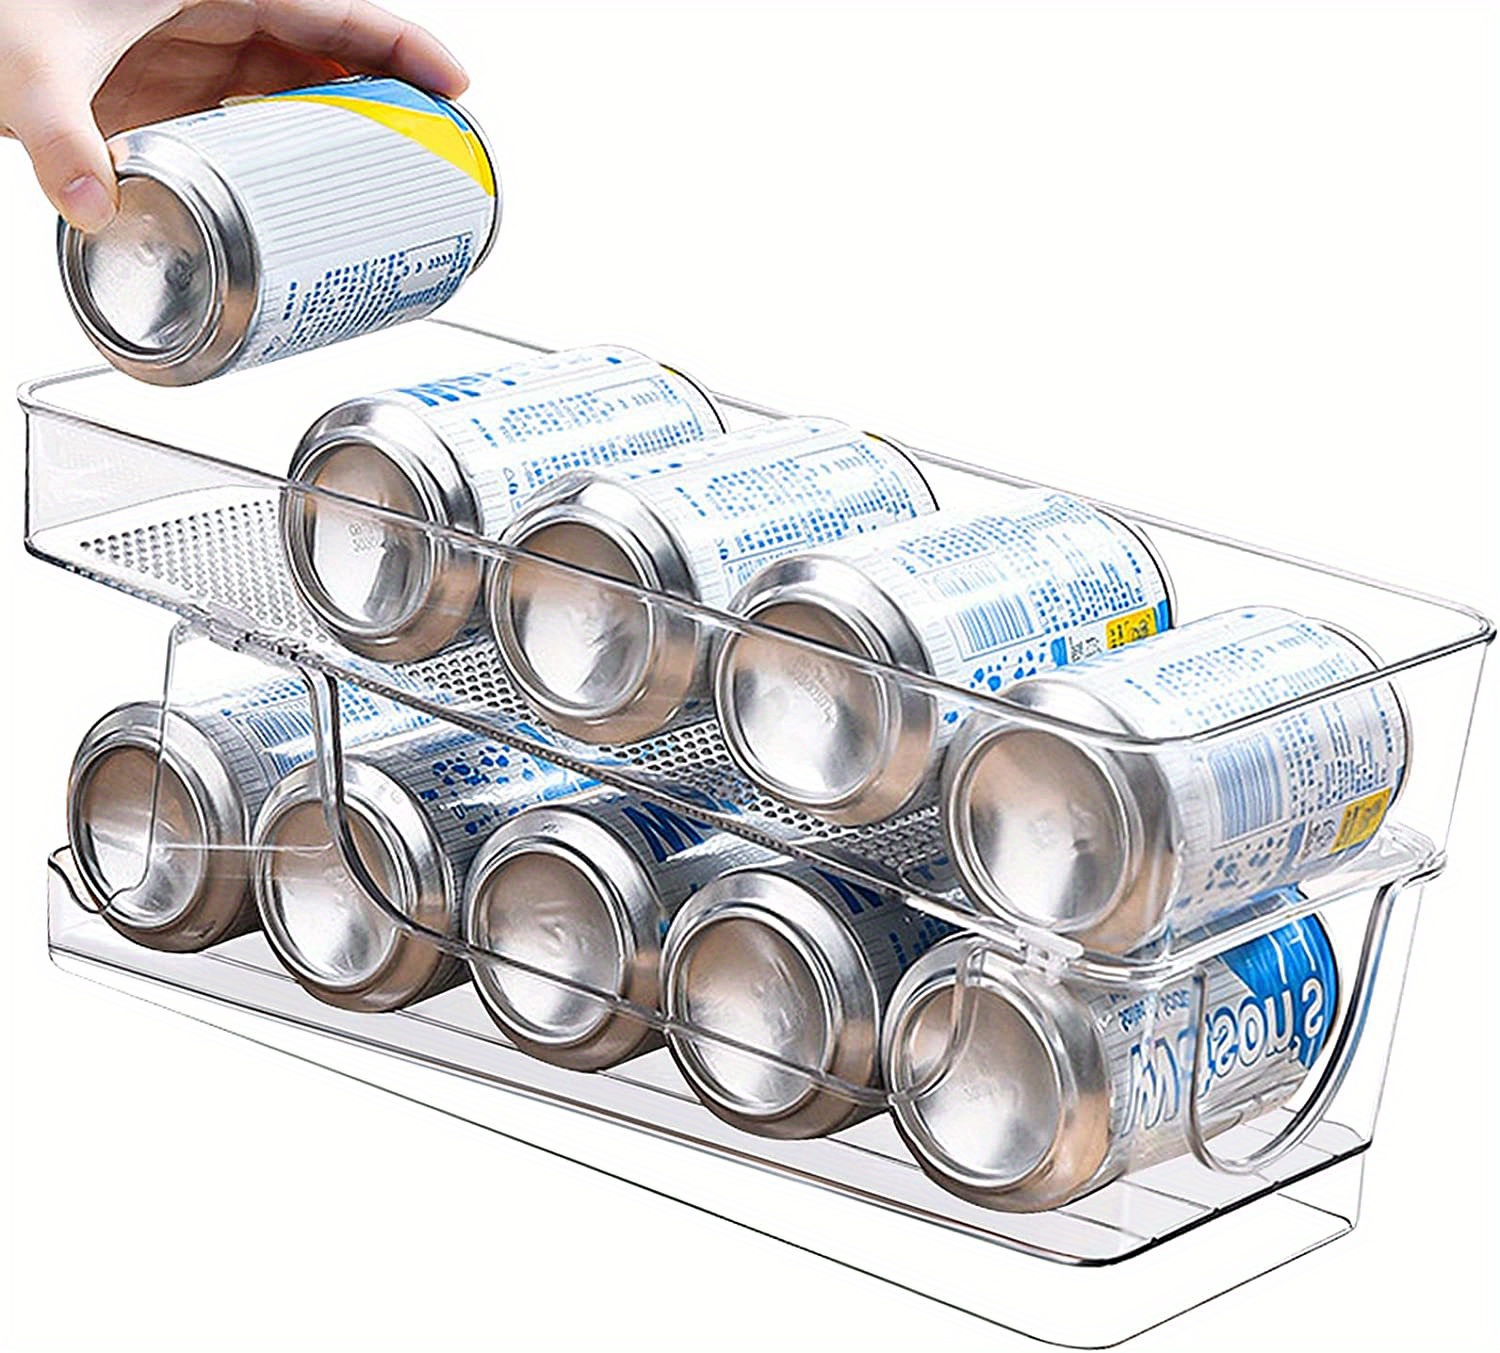 etoper Soda can Organizer for Refrigerator, 2 Pack Soda Can Storage  Organizer for Fridge Pantry, Double-Layer Rolling Soda Can Dispenser,  Fridge Drink